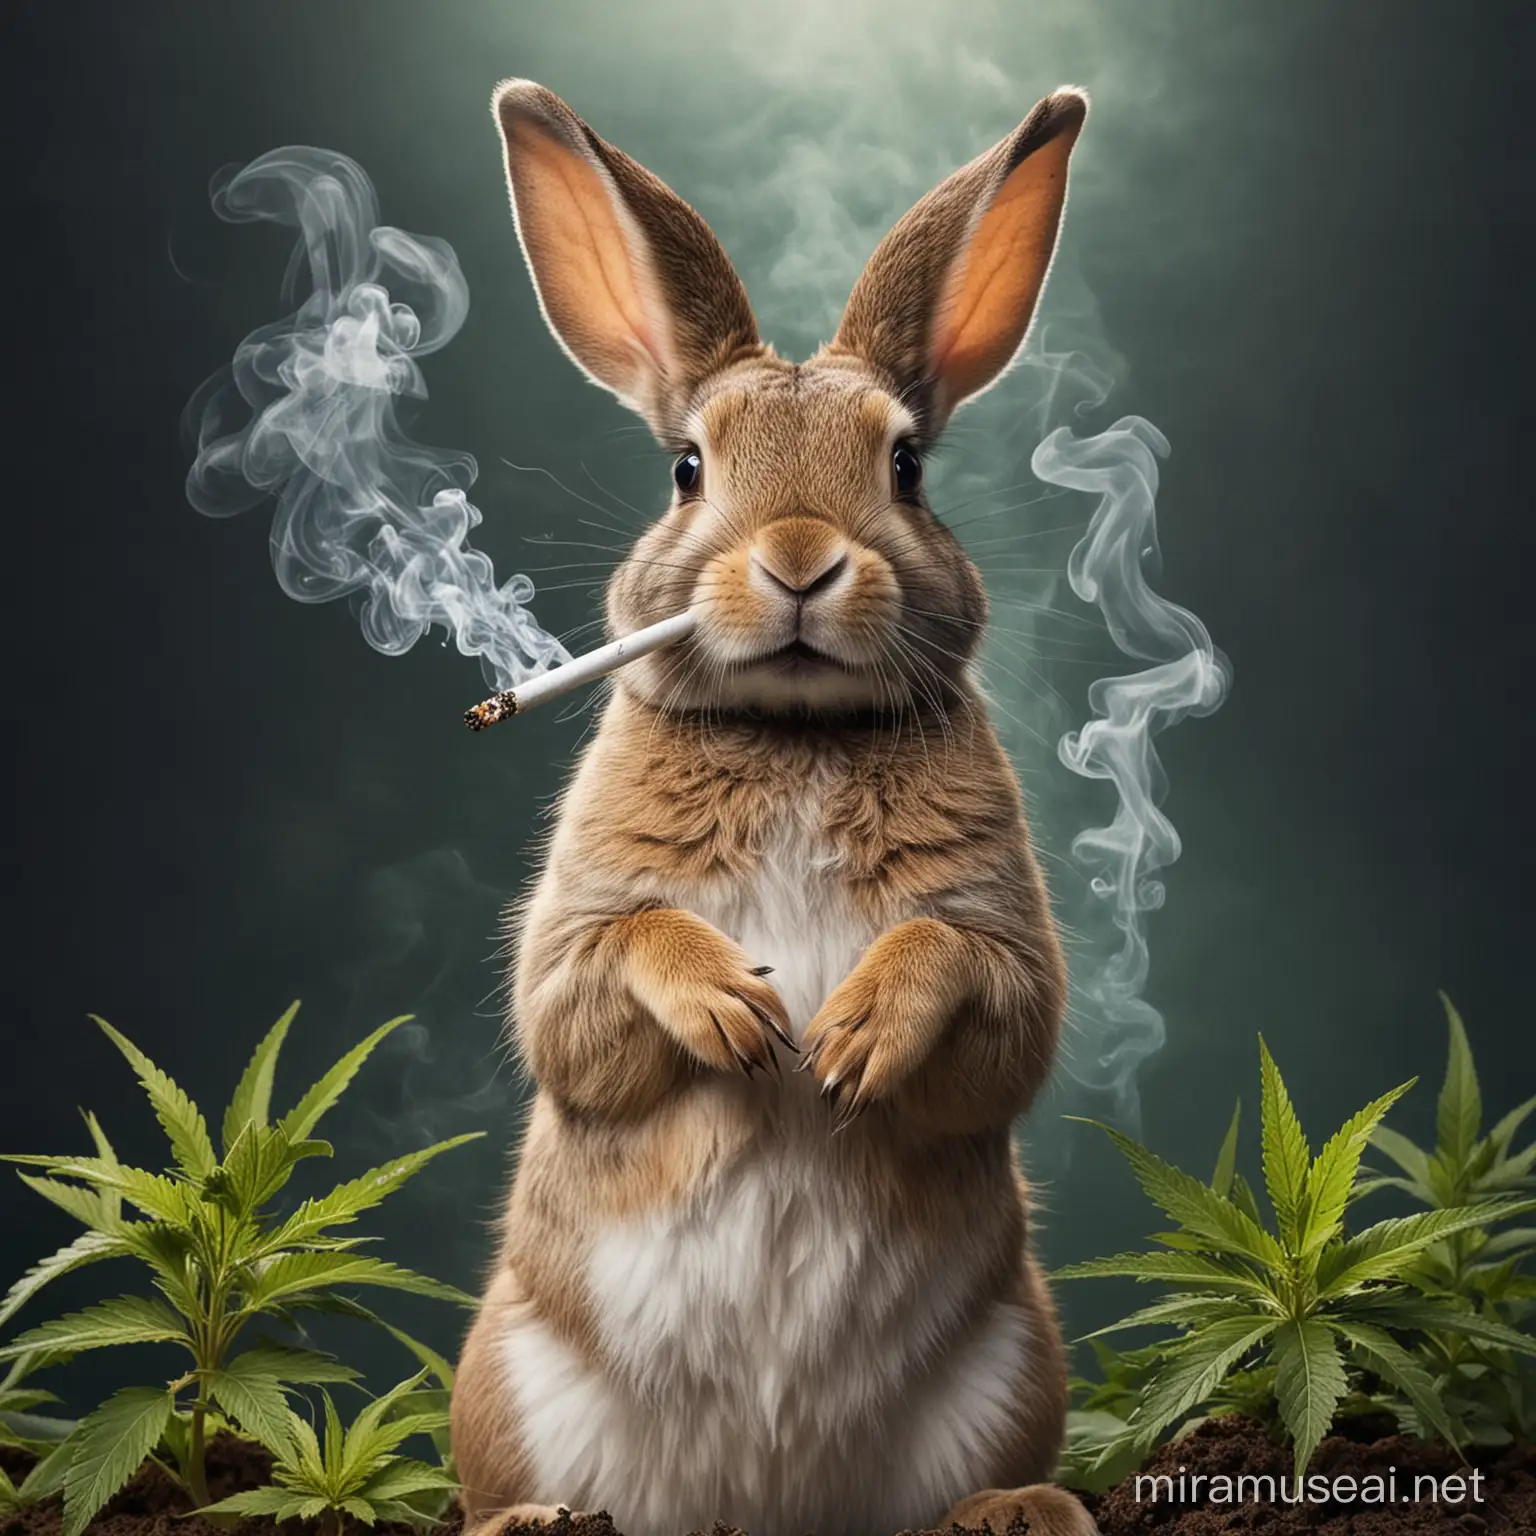 CannabisLoving Rabbit Enjoying a Relaxing Smoke